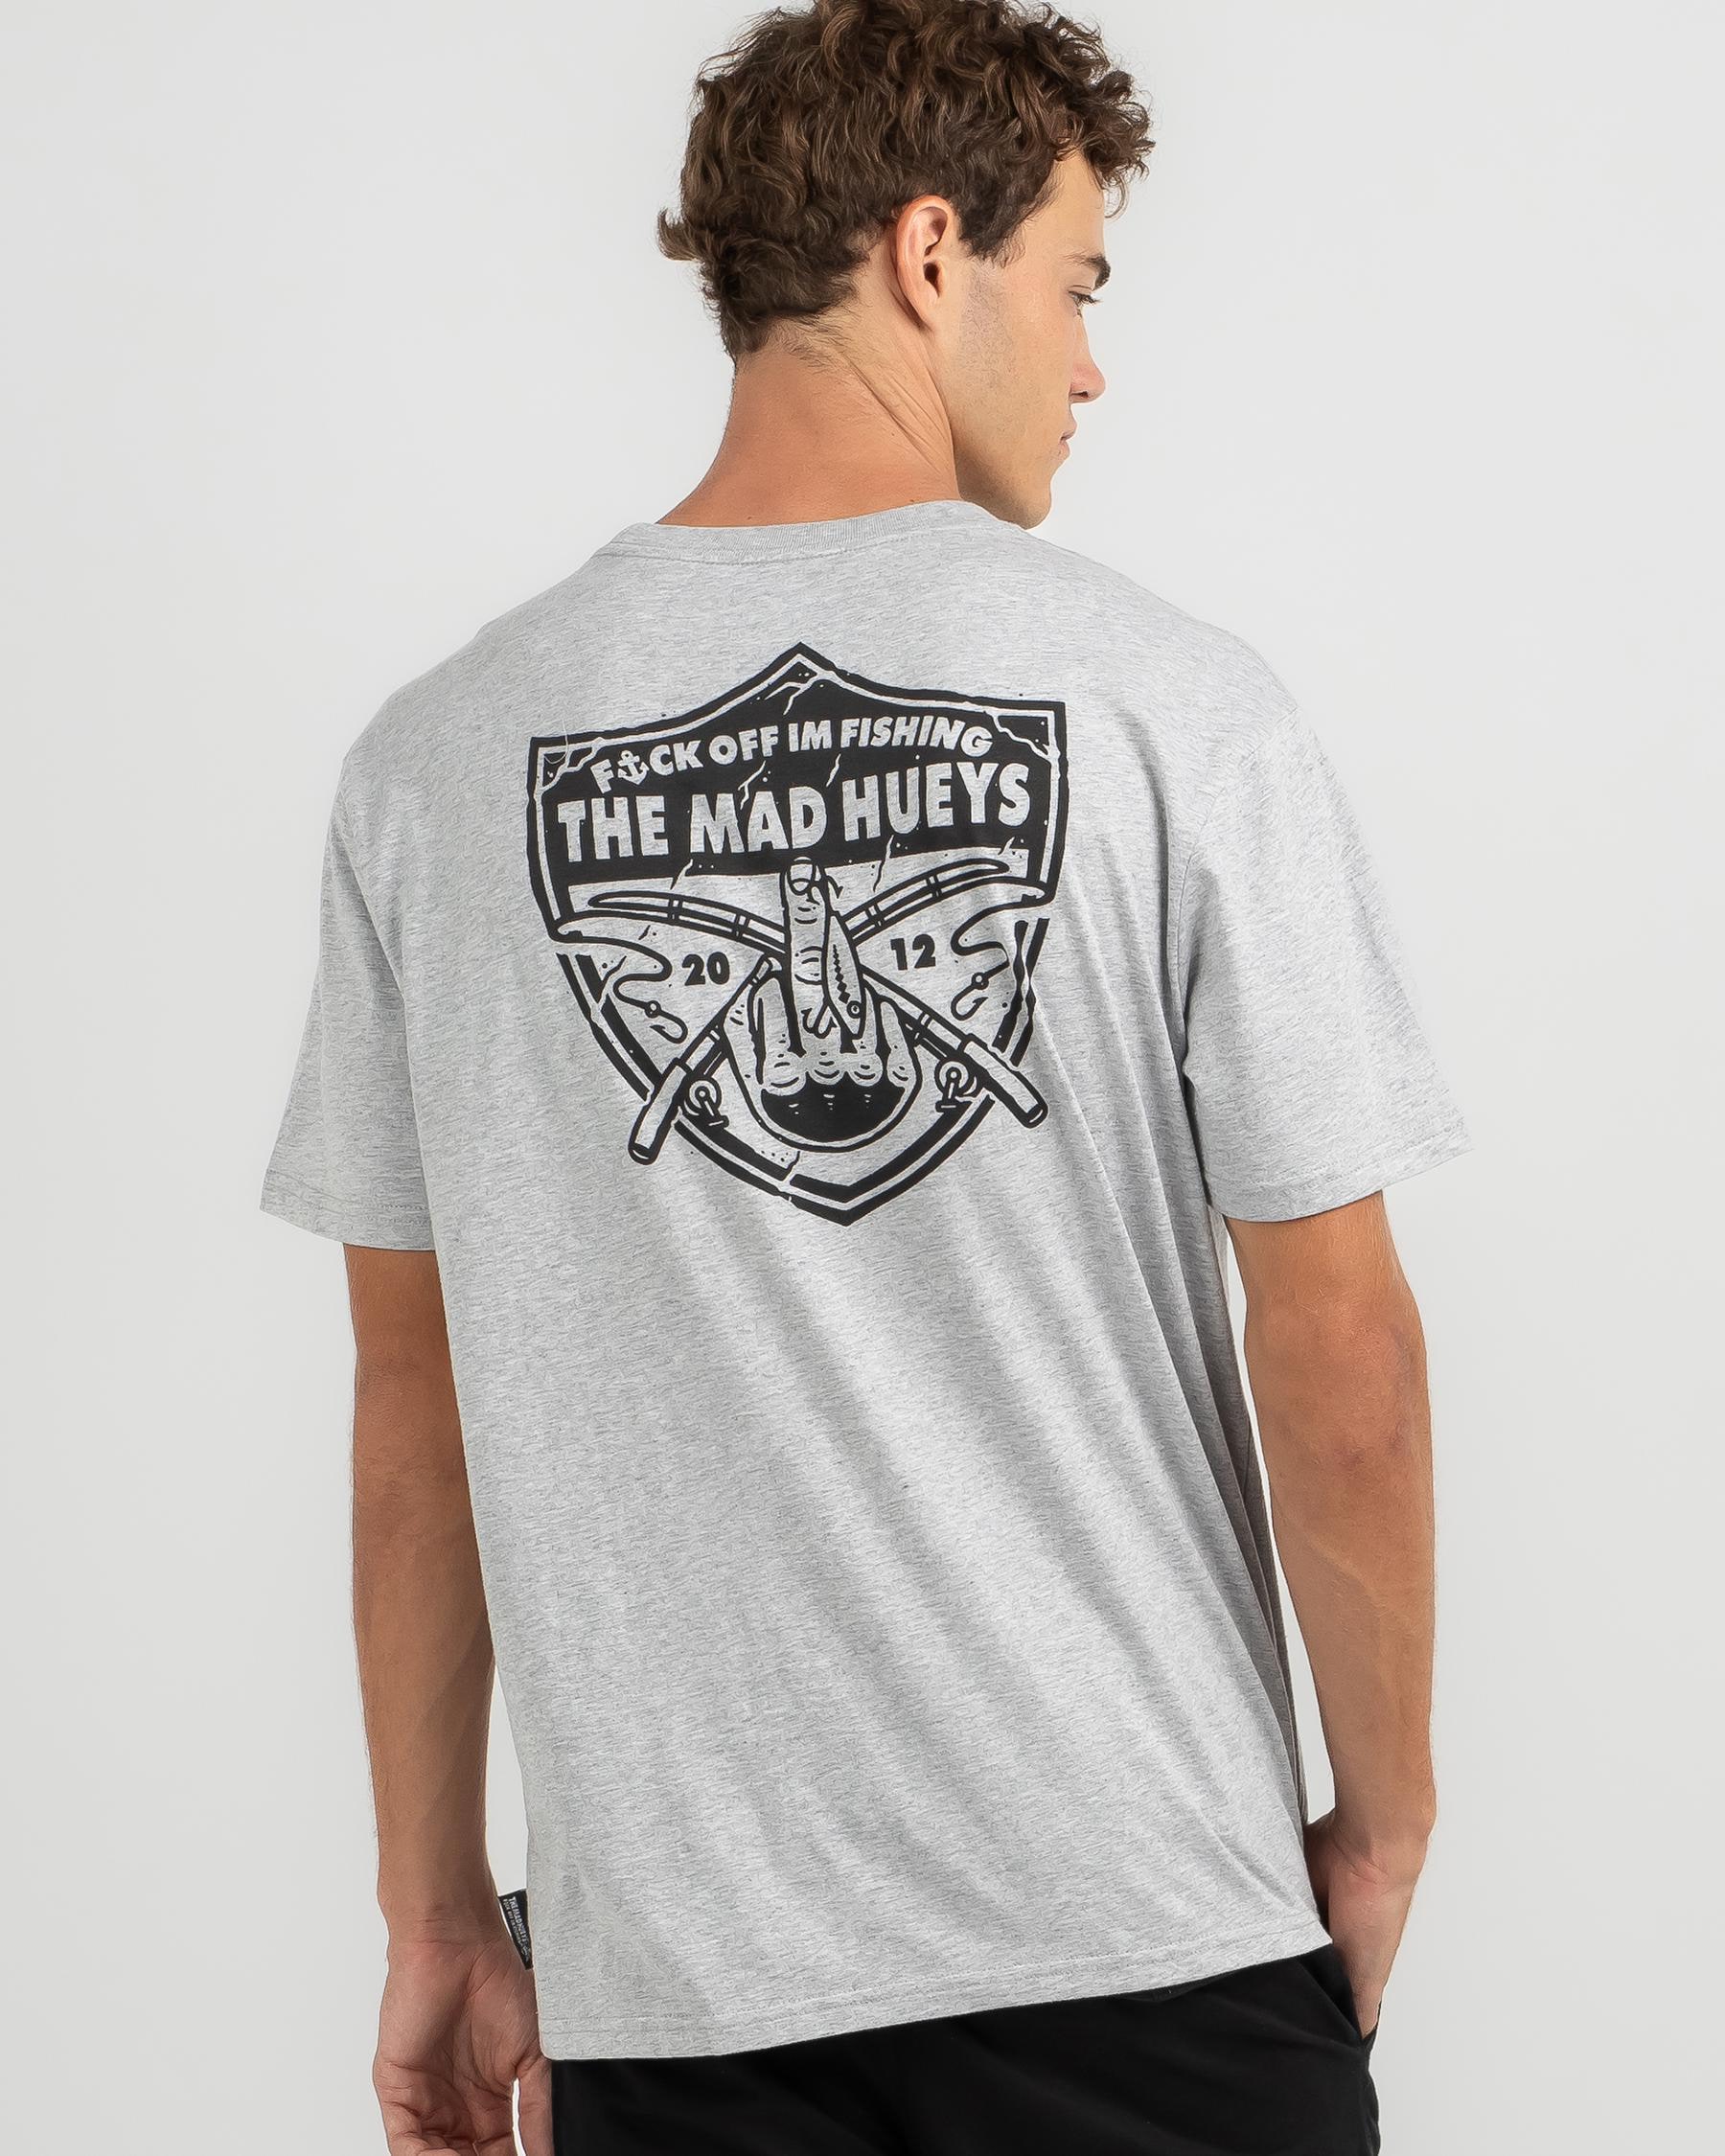 The Mad Hueys Raider Fk Off Fishing T-Shirt In Grey Marle - FREE